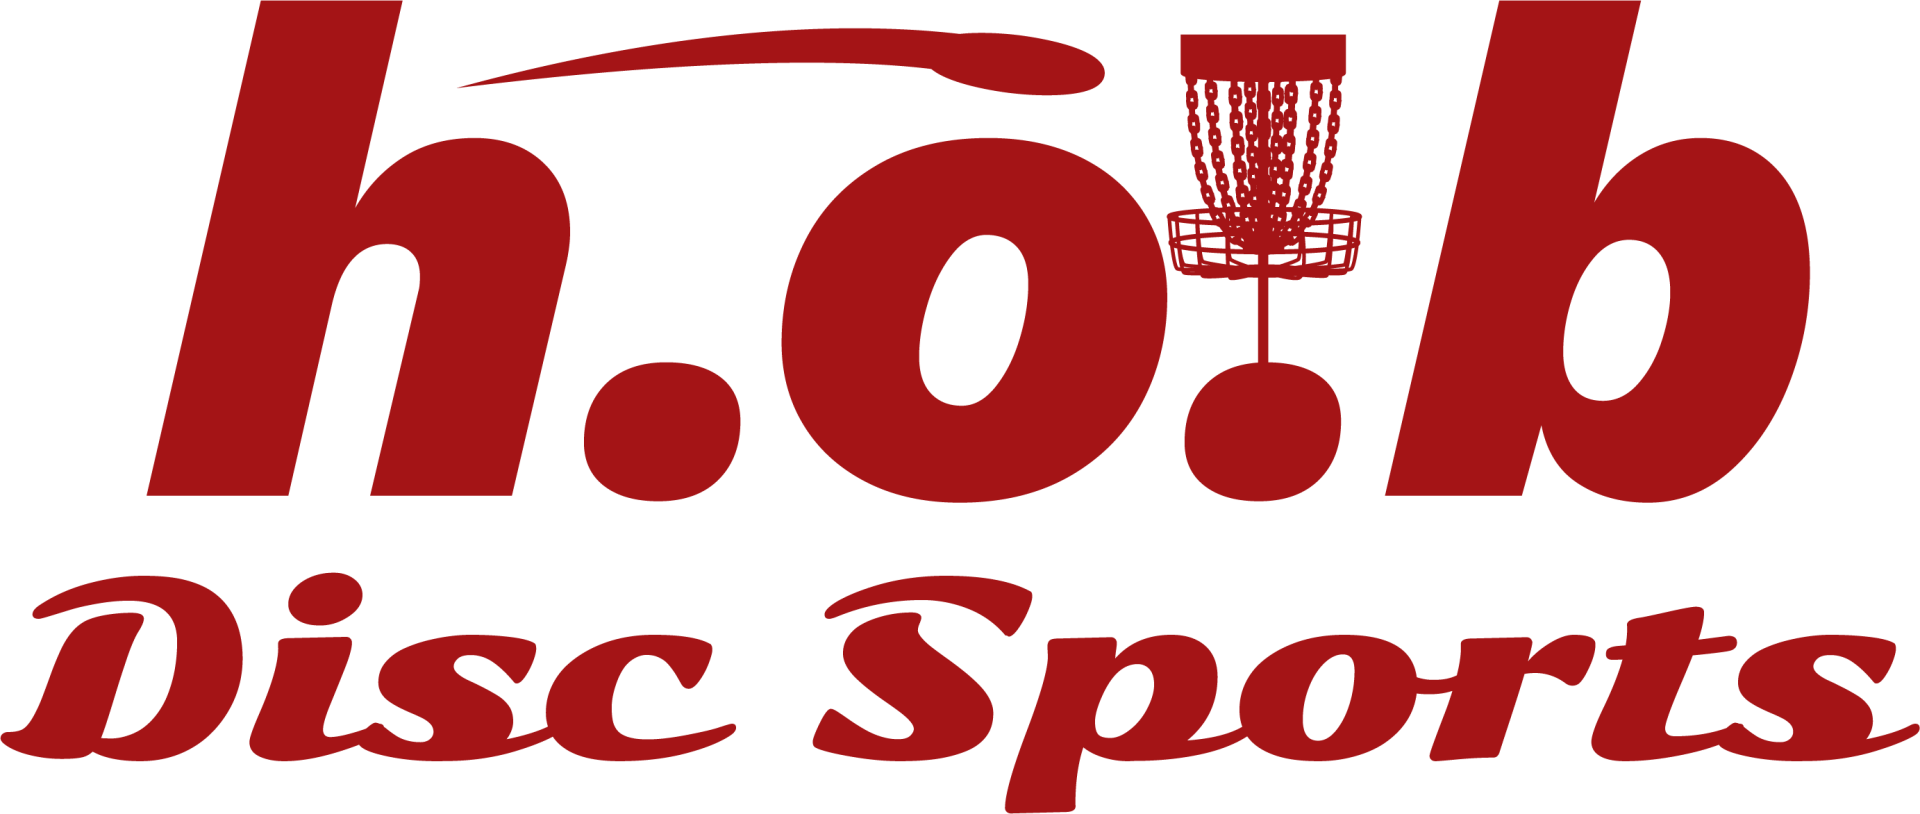 h. o. b. disc sports logo